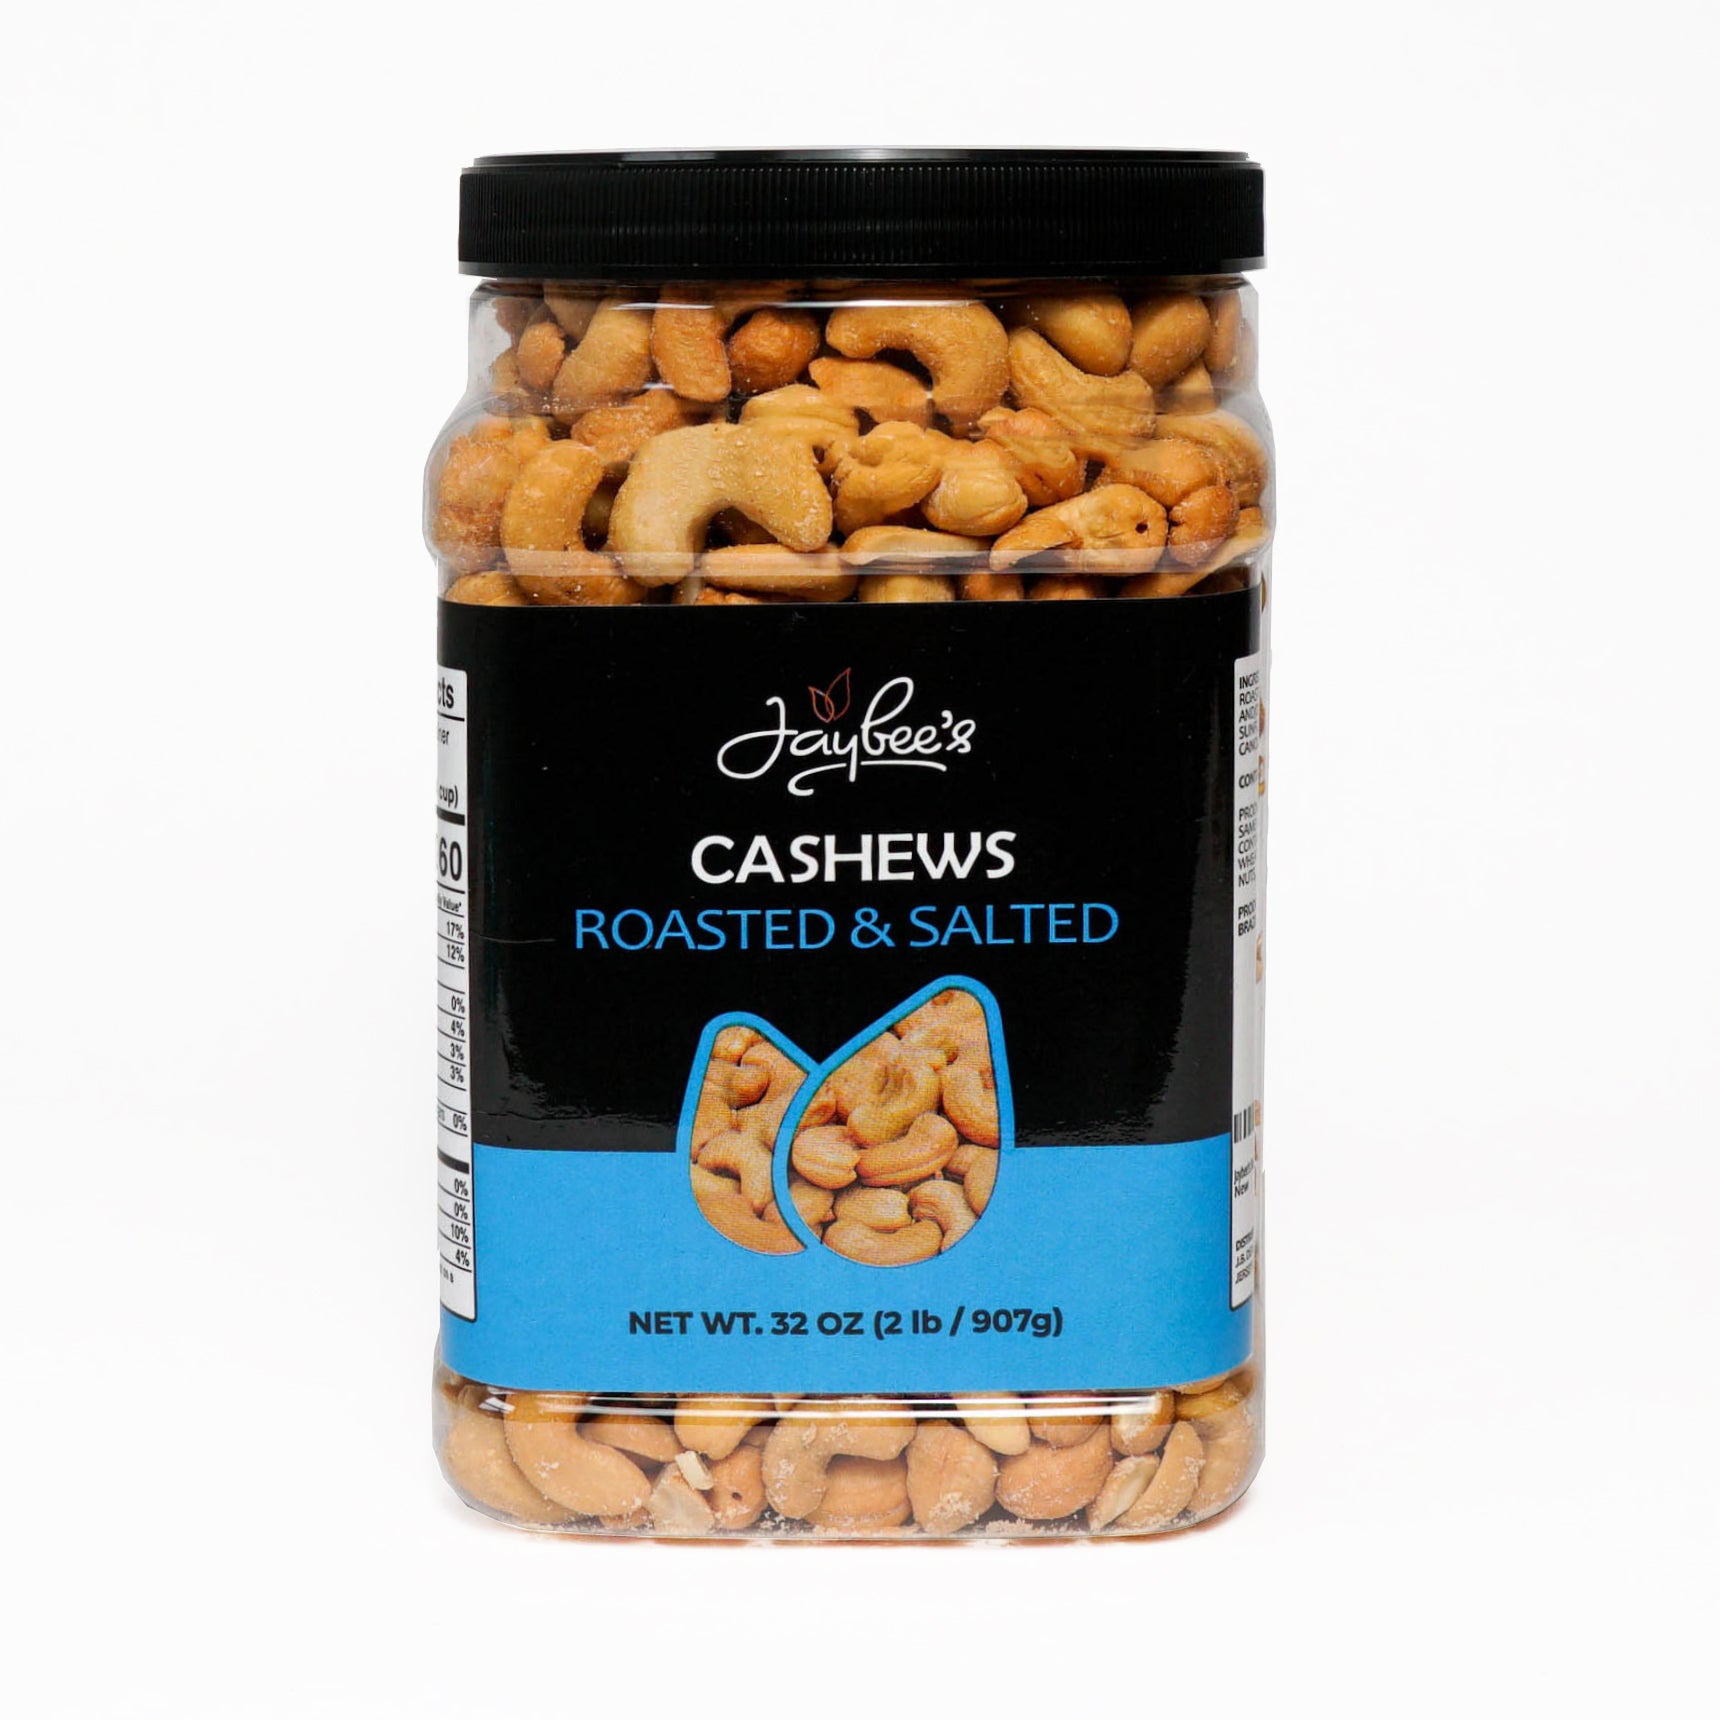 Cashews - Roasted & Salted